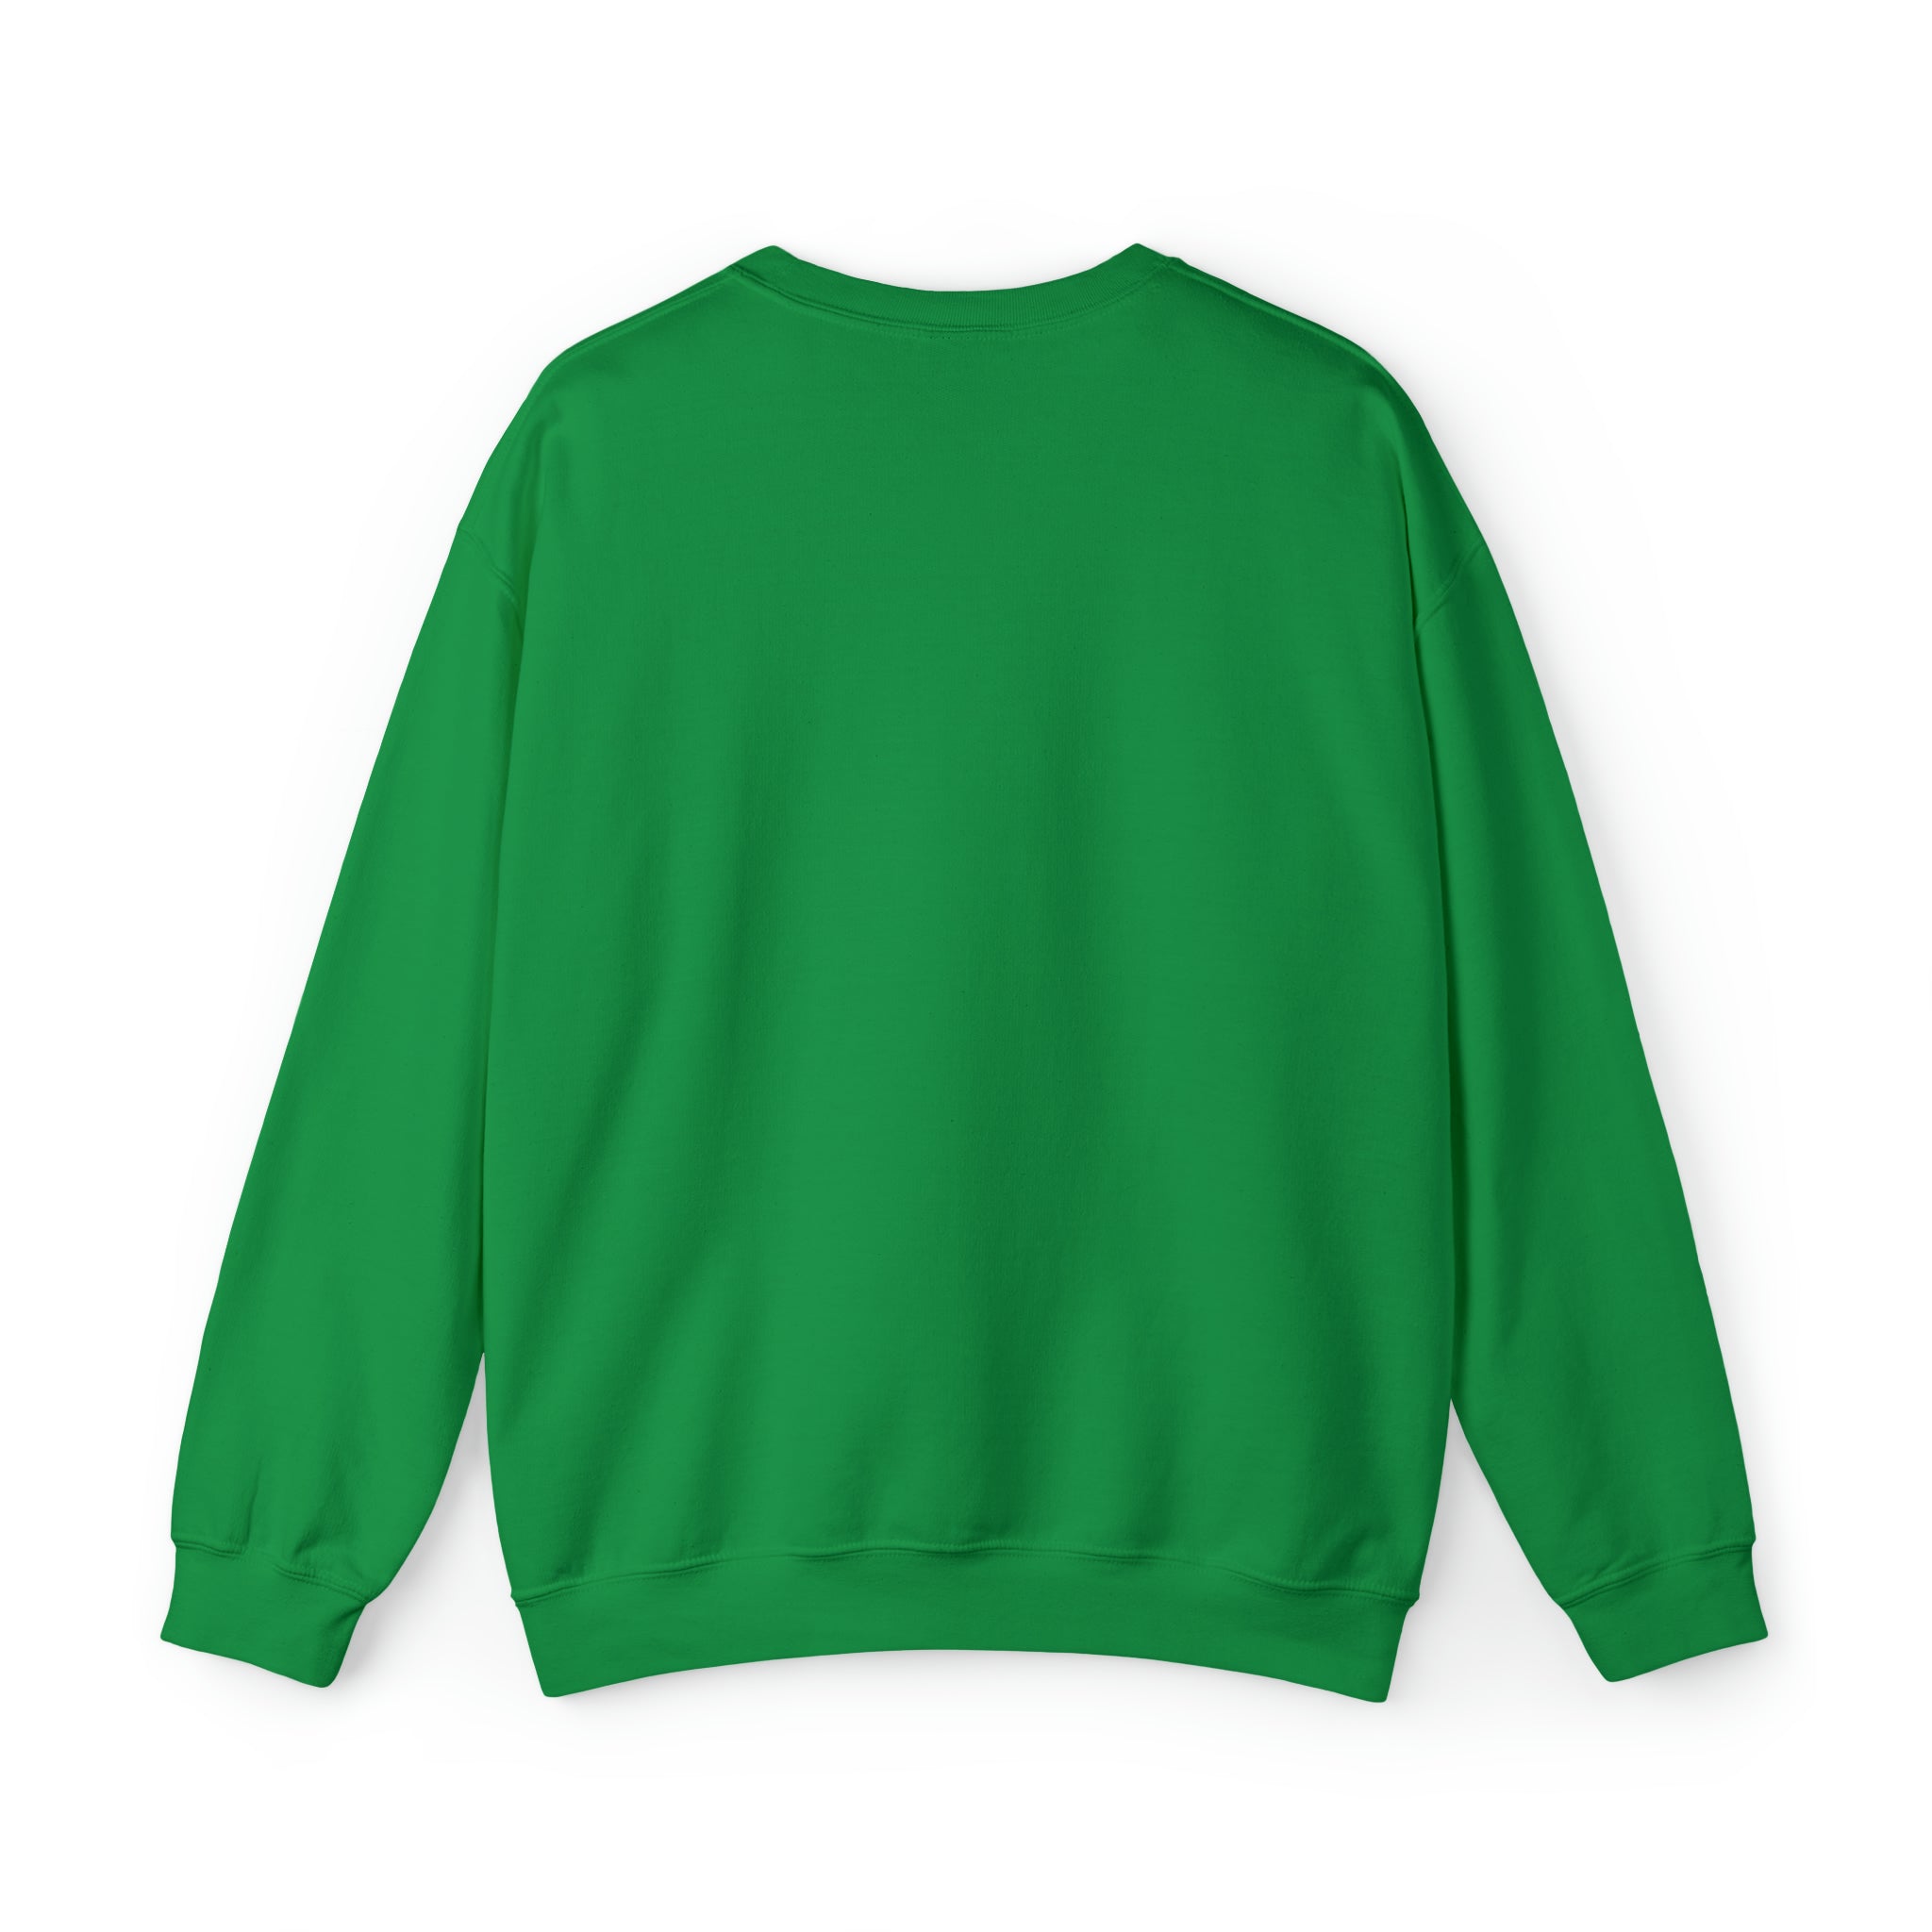 KTOWN Varsity Crewneck Sweatshirt in Green